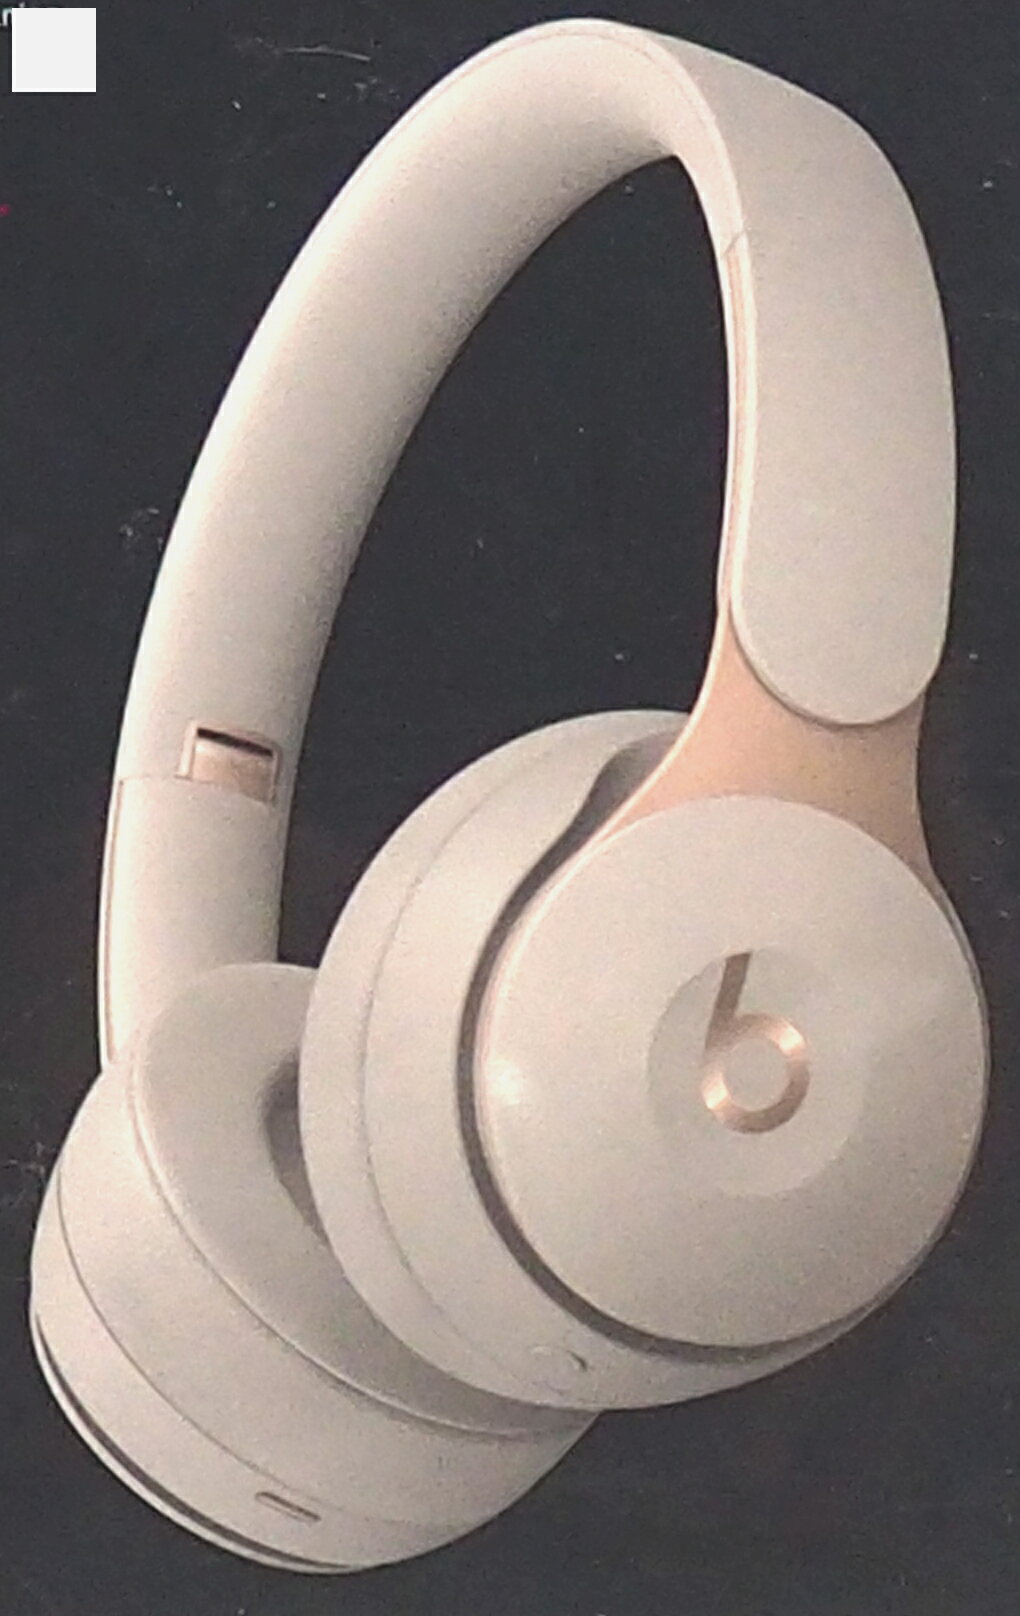 A4c Beats Solo Pro Wireless Noise Cancelling On Ear Headphones